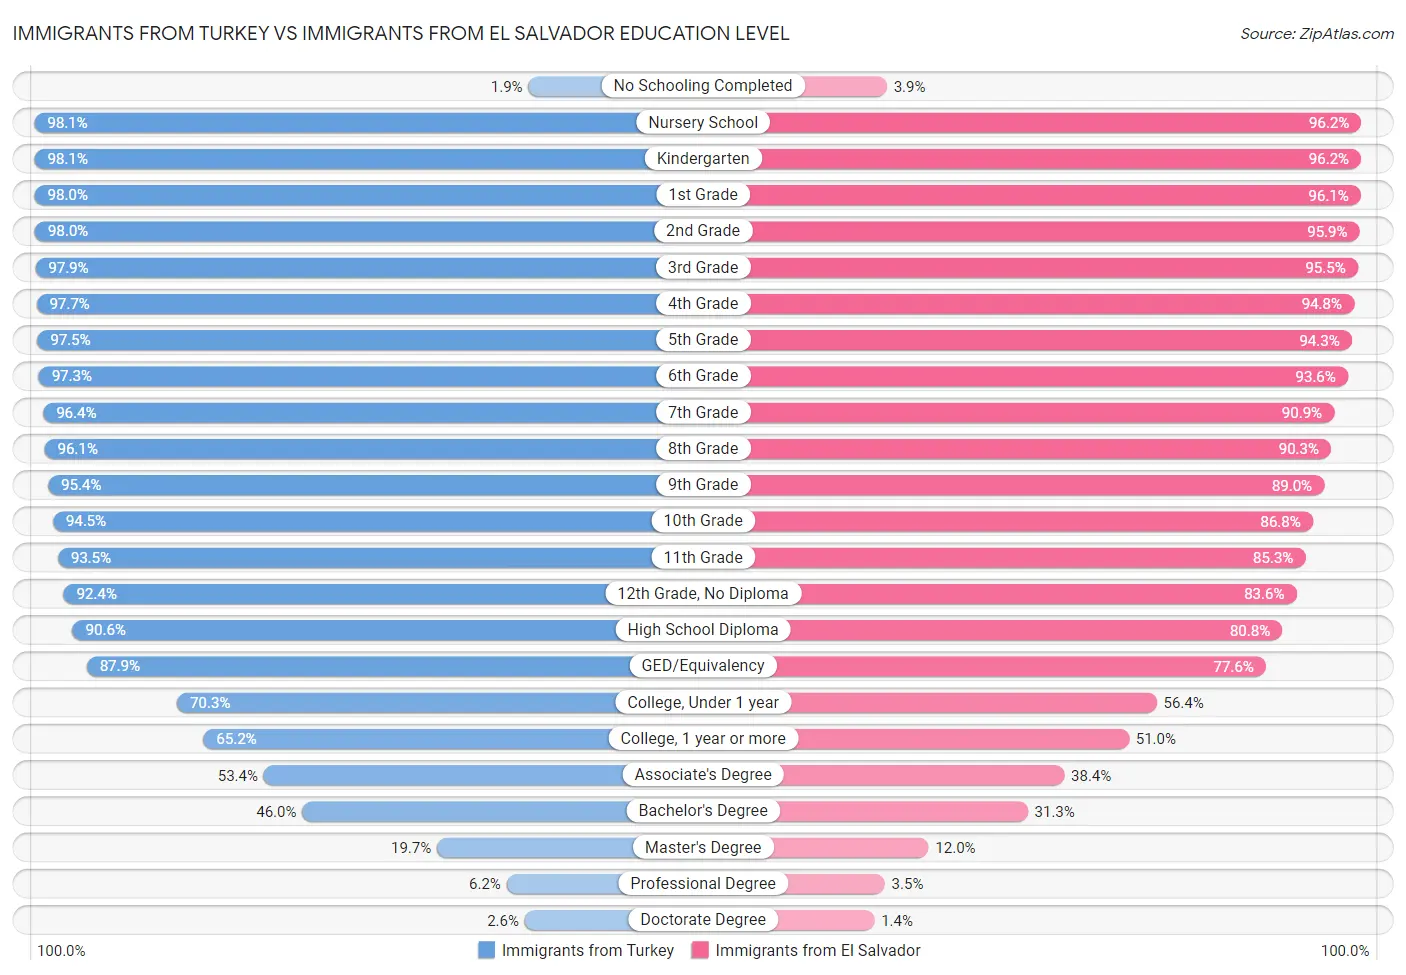 Immigrants from Turkey vs Immigrants from El Salvador Education Level